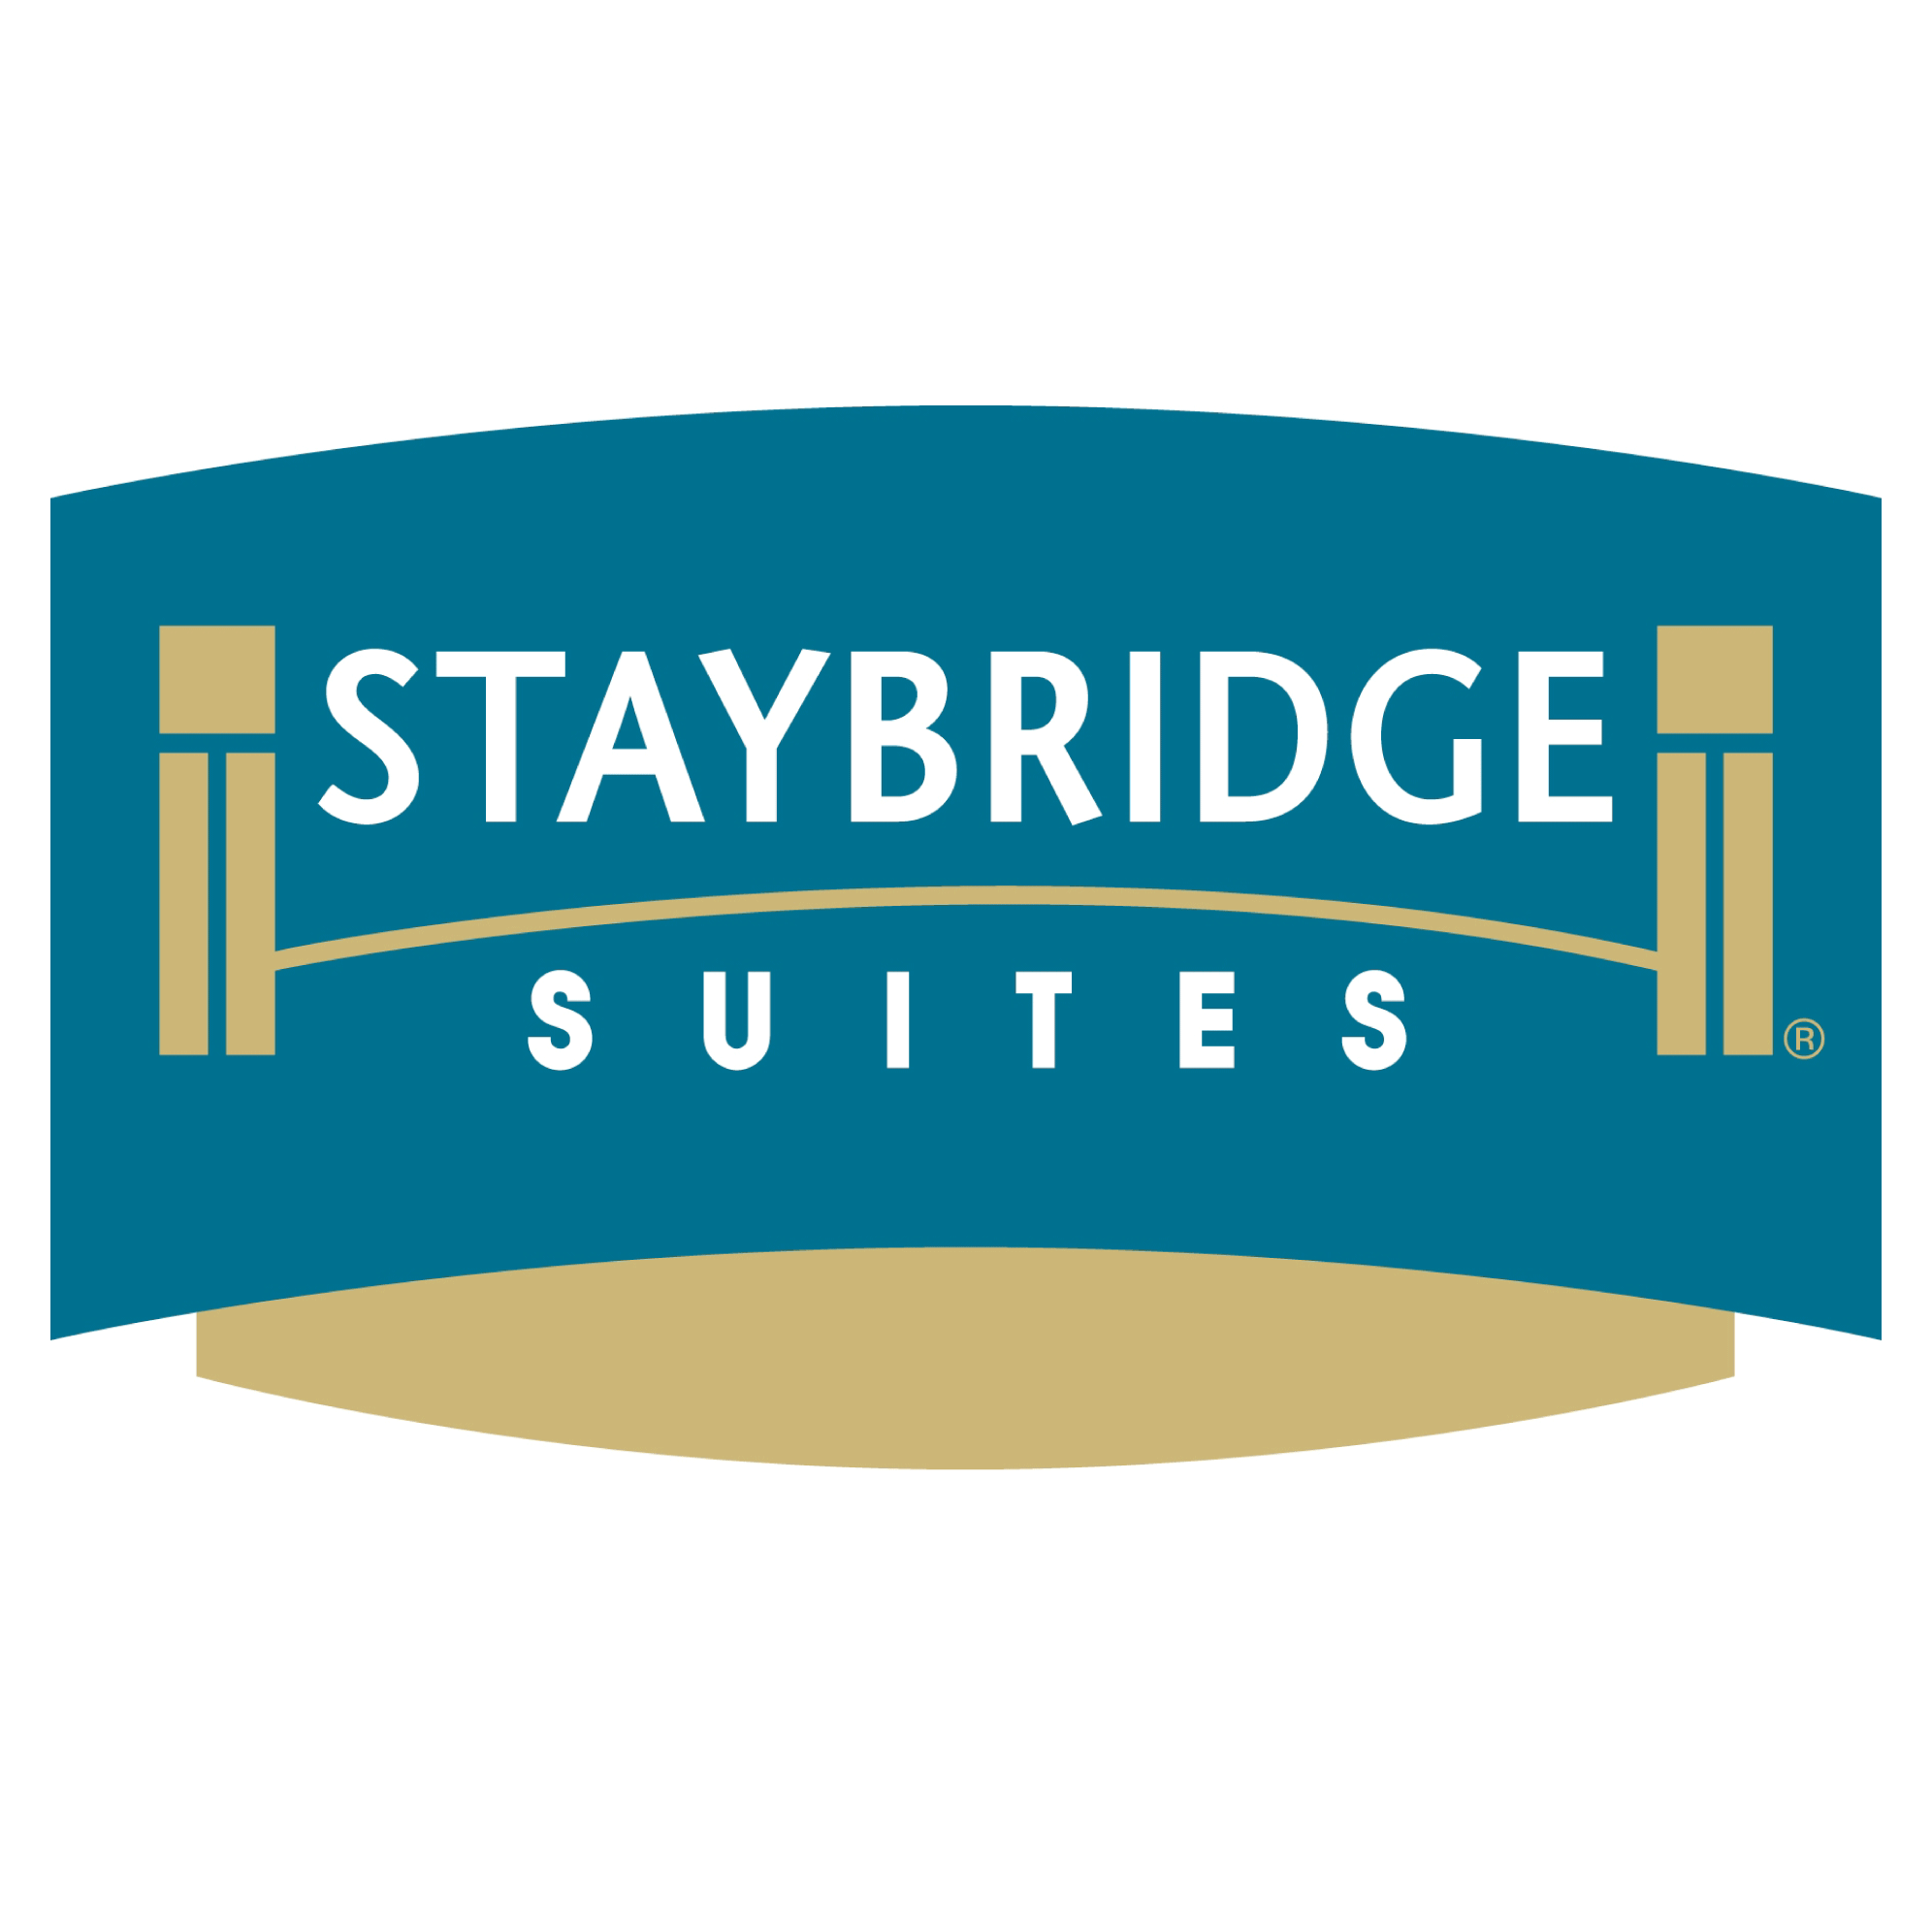 Staybridge Suite Name Badges